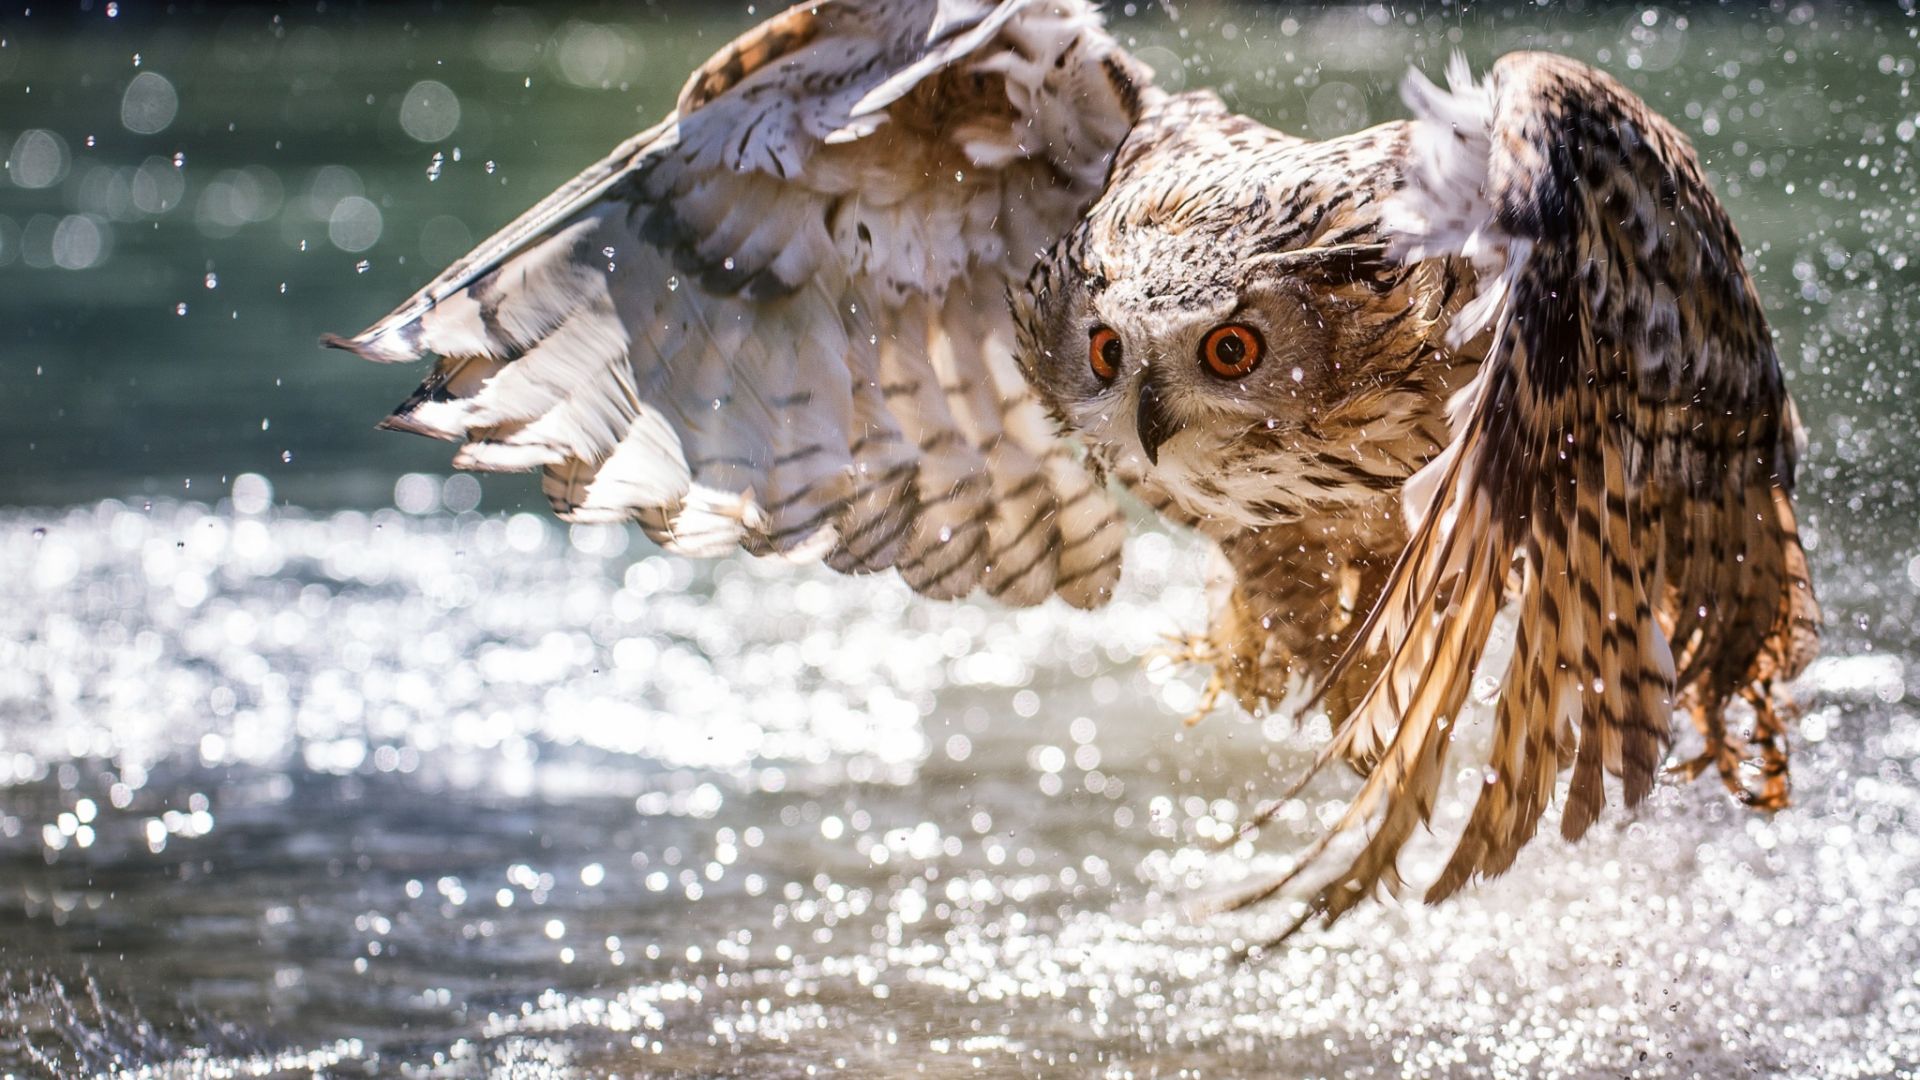 Wallpaper Wings, fly, water splashes, predator, bird, owl